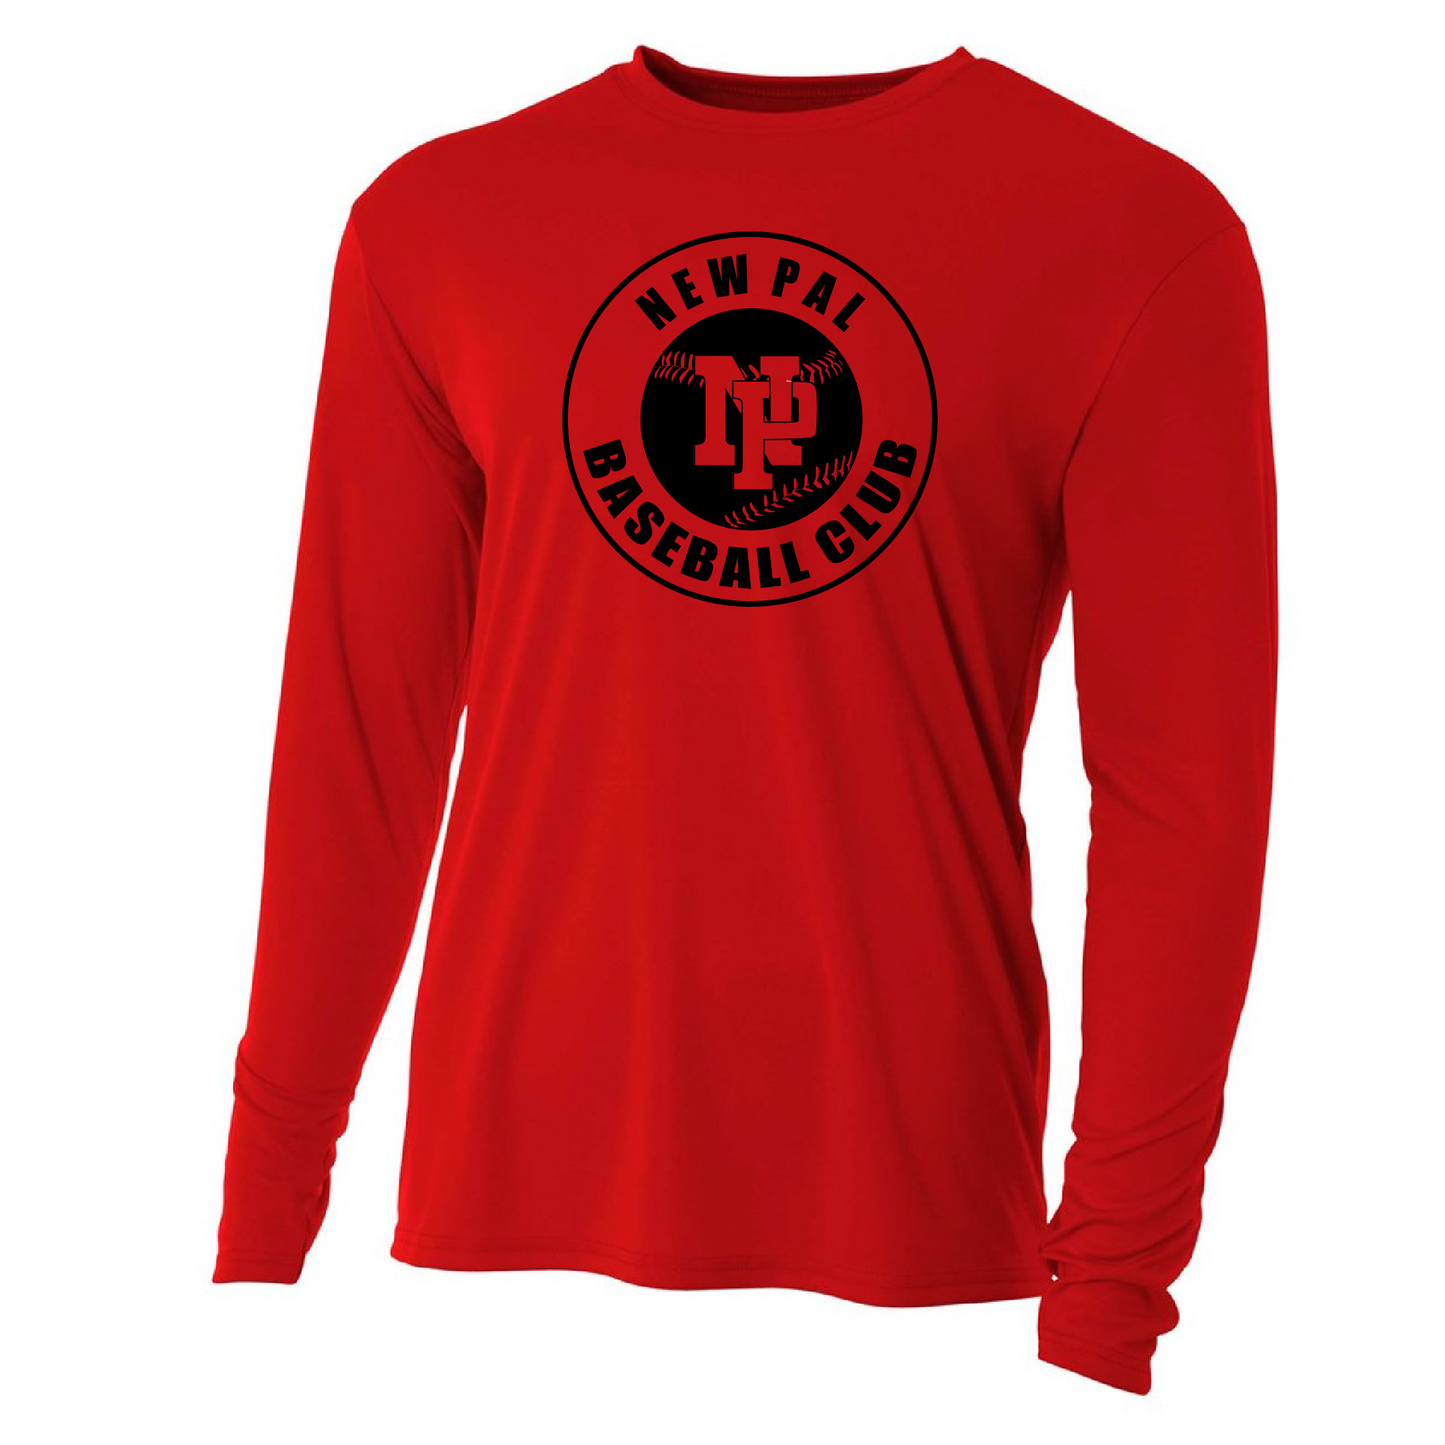 Mens/Youth Long Sleeve T-Shirt - NP Baseball Club (black logo)